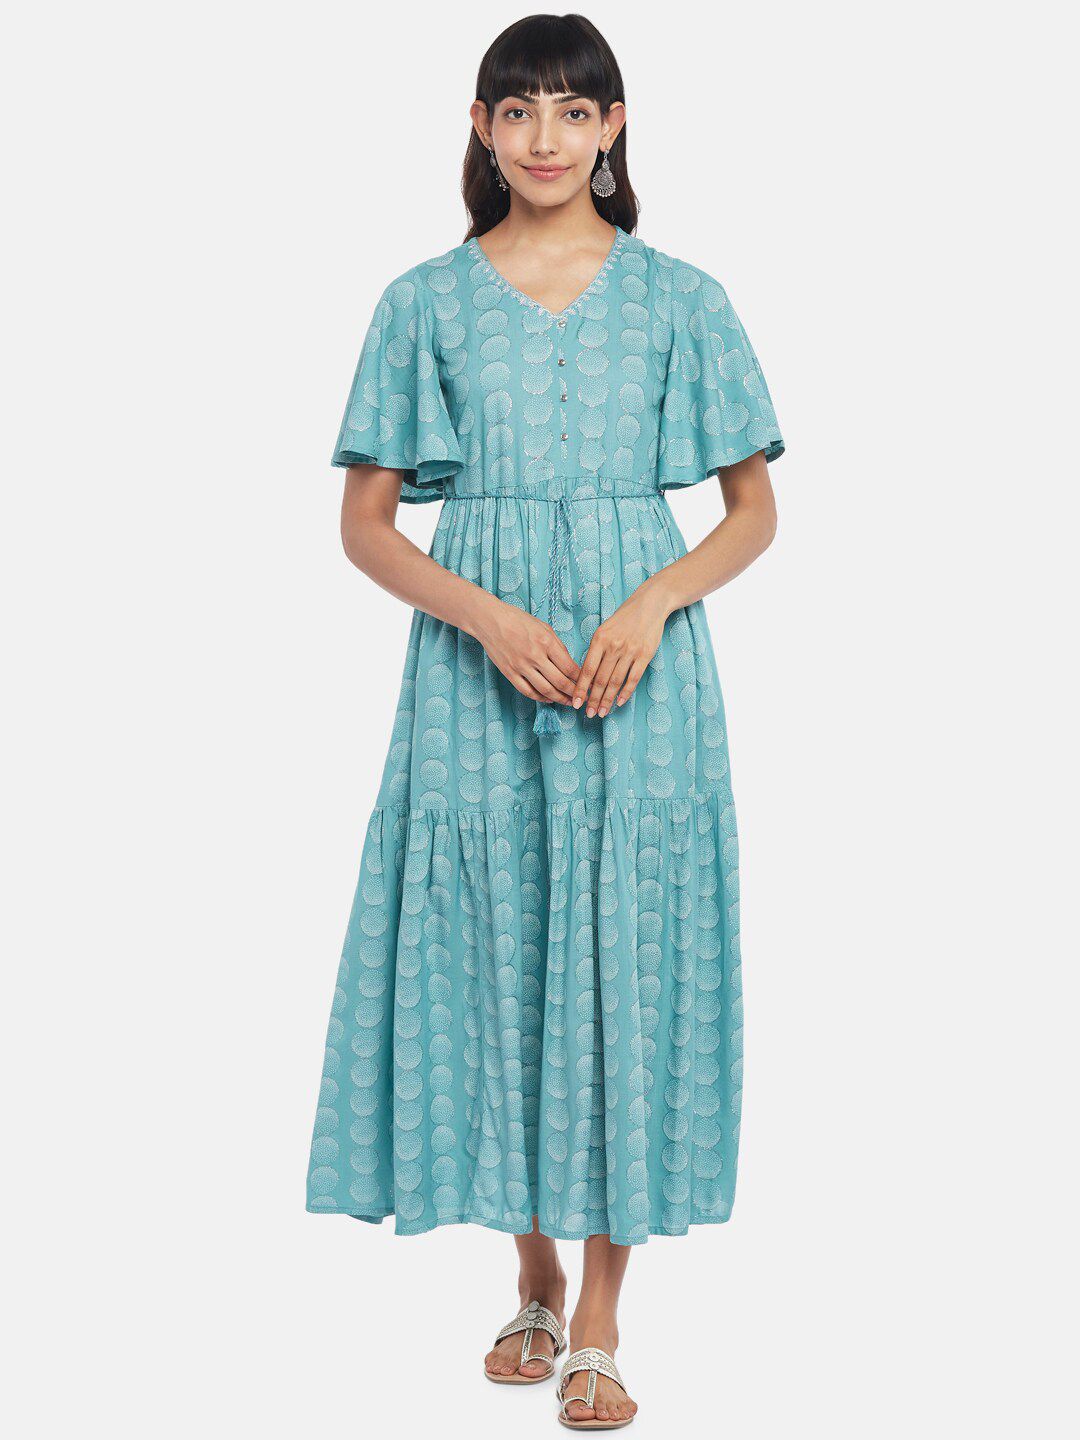 AKKRITI BY PANTALOONS Turquoise Blue Ethnic Motifs Ethnic Midi Dress Price in India